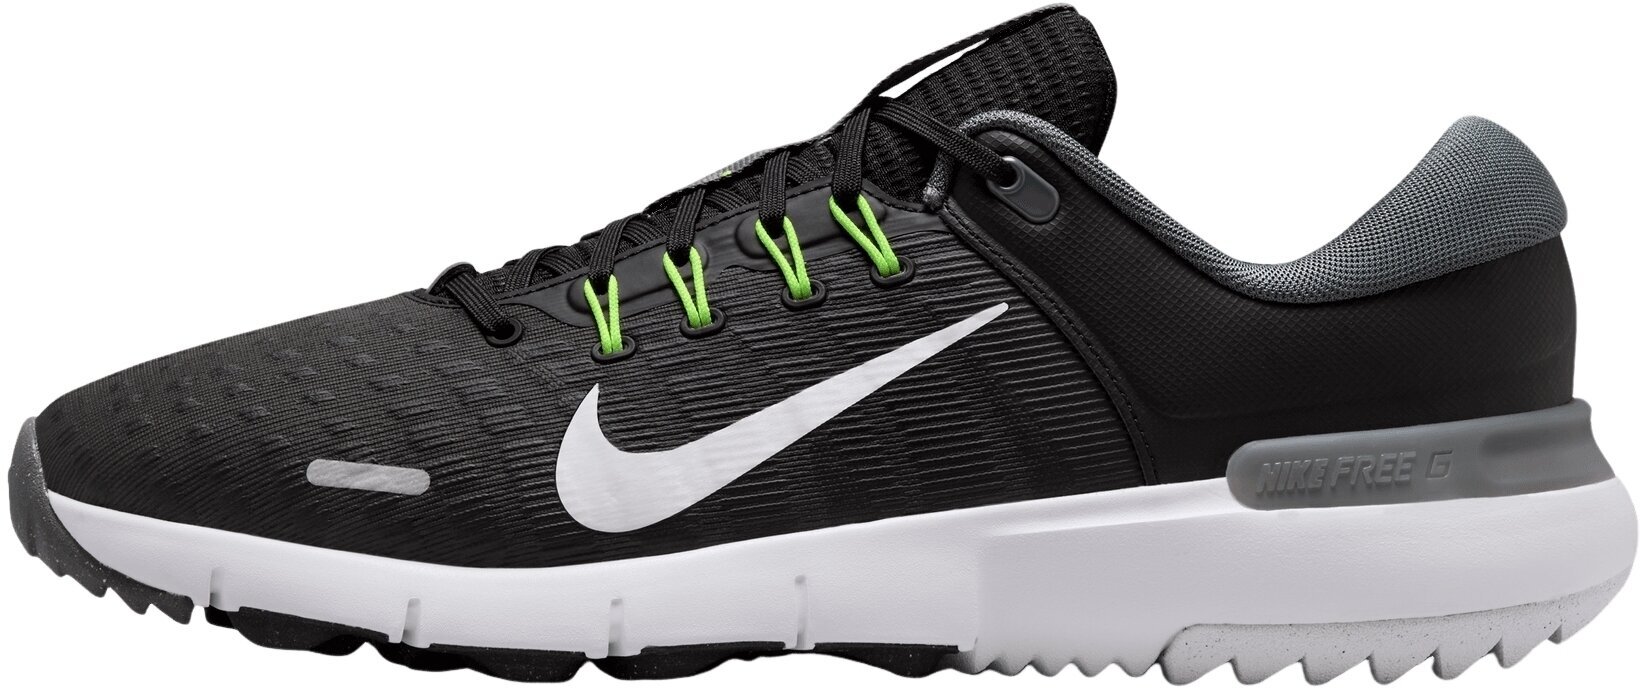 Men's golf shoes Nike Free Golf Unisex Shoes Black/White/Iron Grey/Volt 43